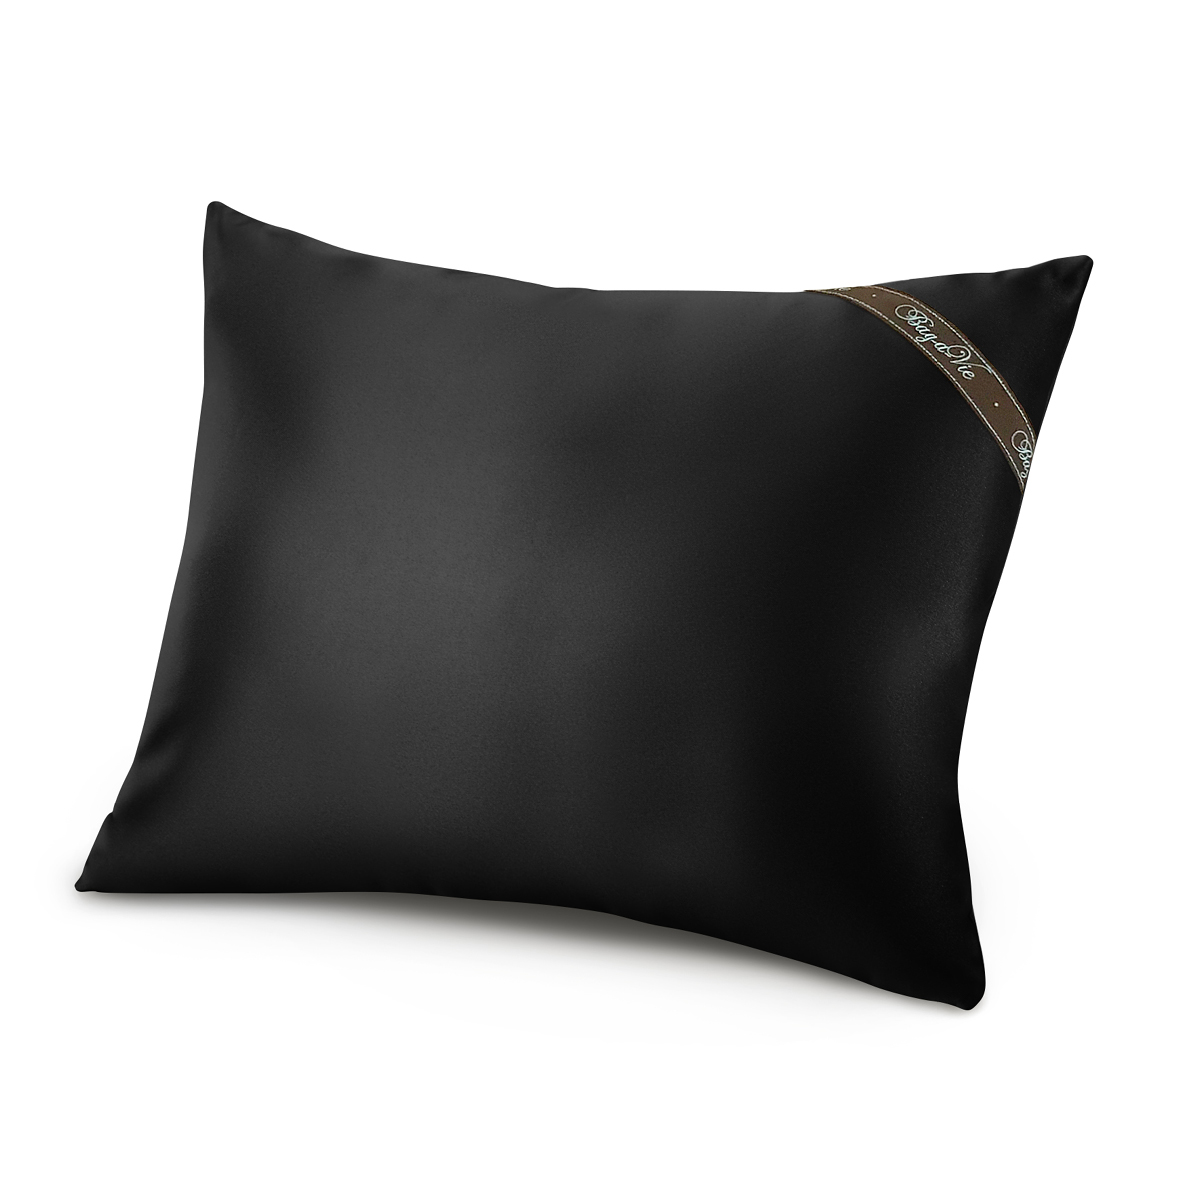 Large Silver Velvet Bag Shaper Purse Pillow - Handbagholic